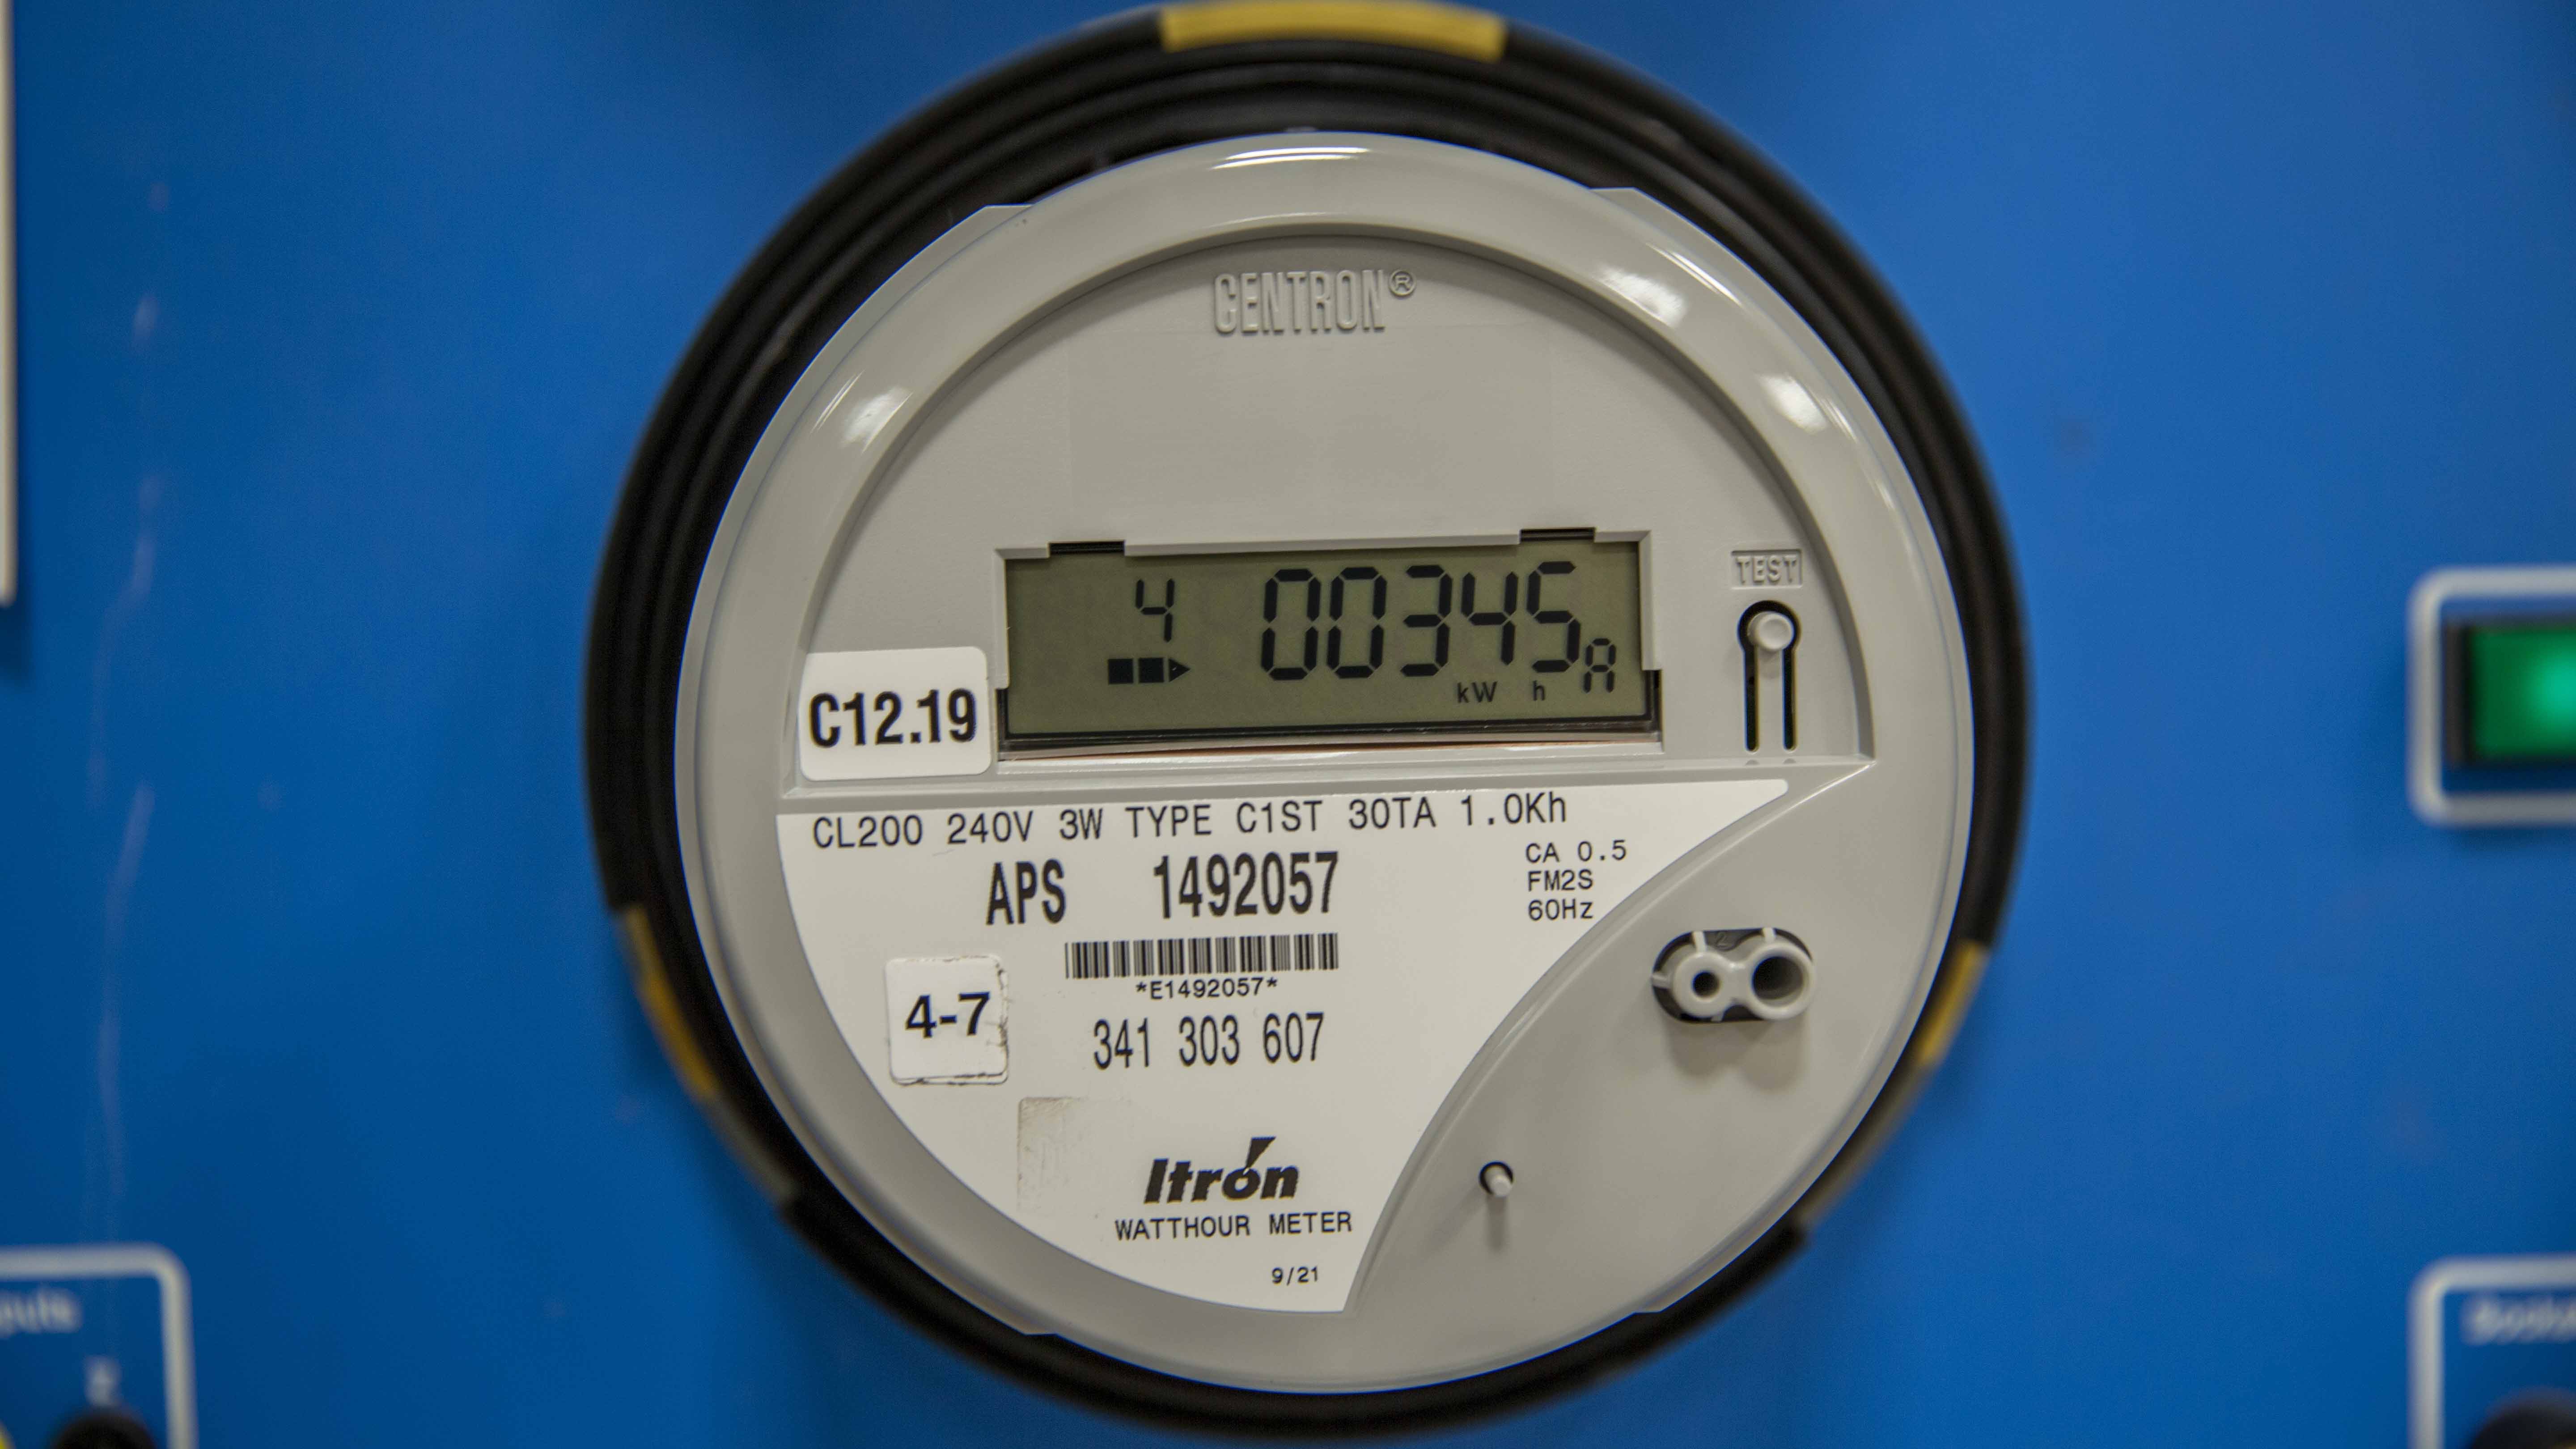 Closeup view of standard AMI a meter